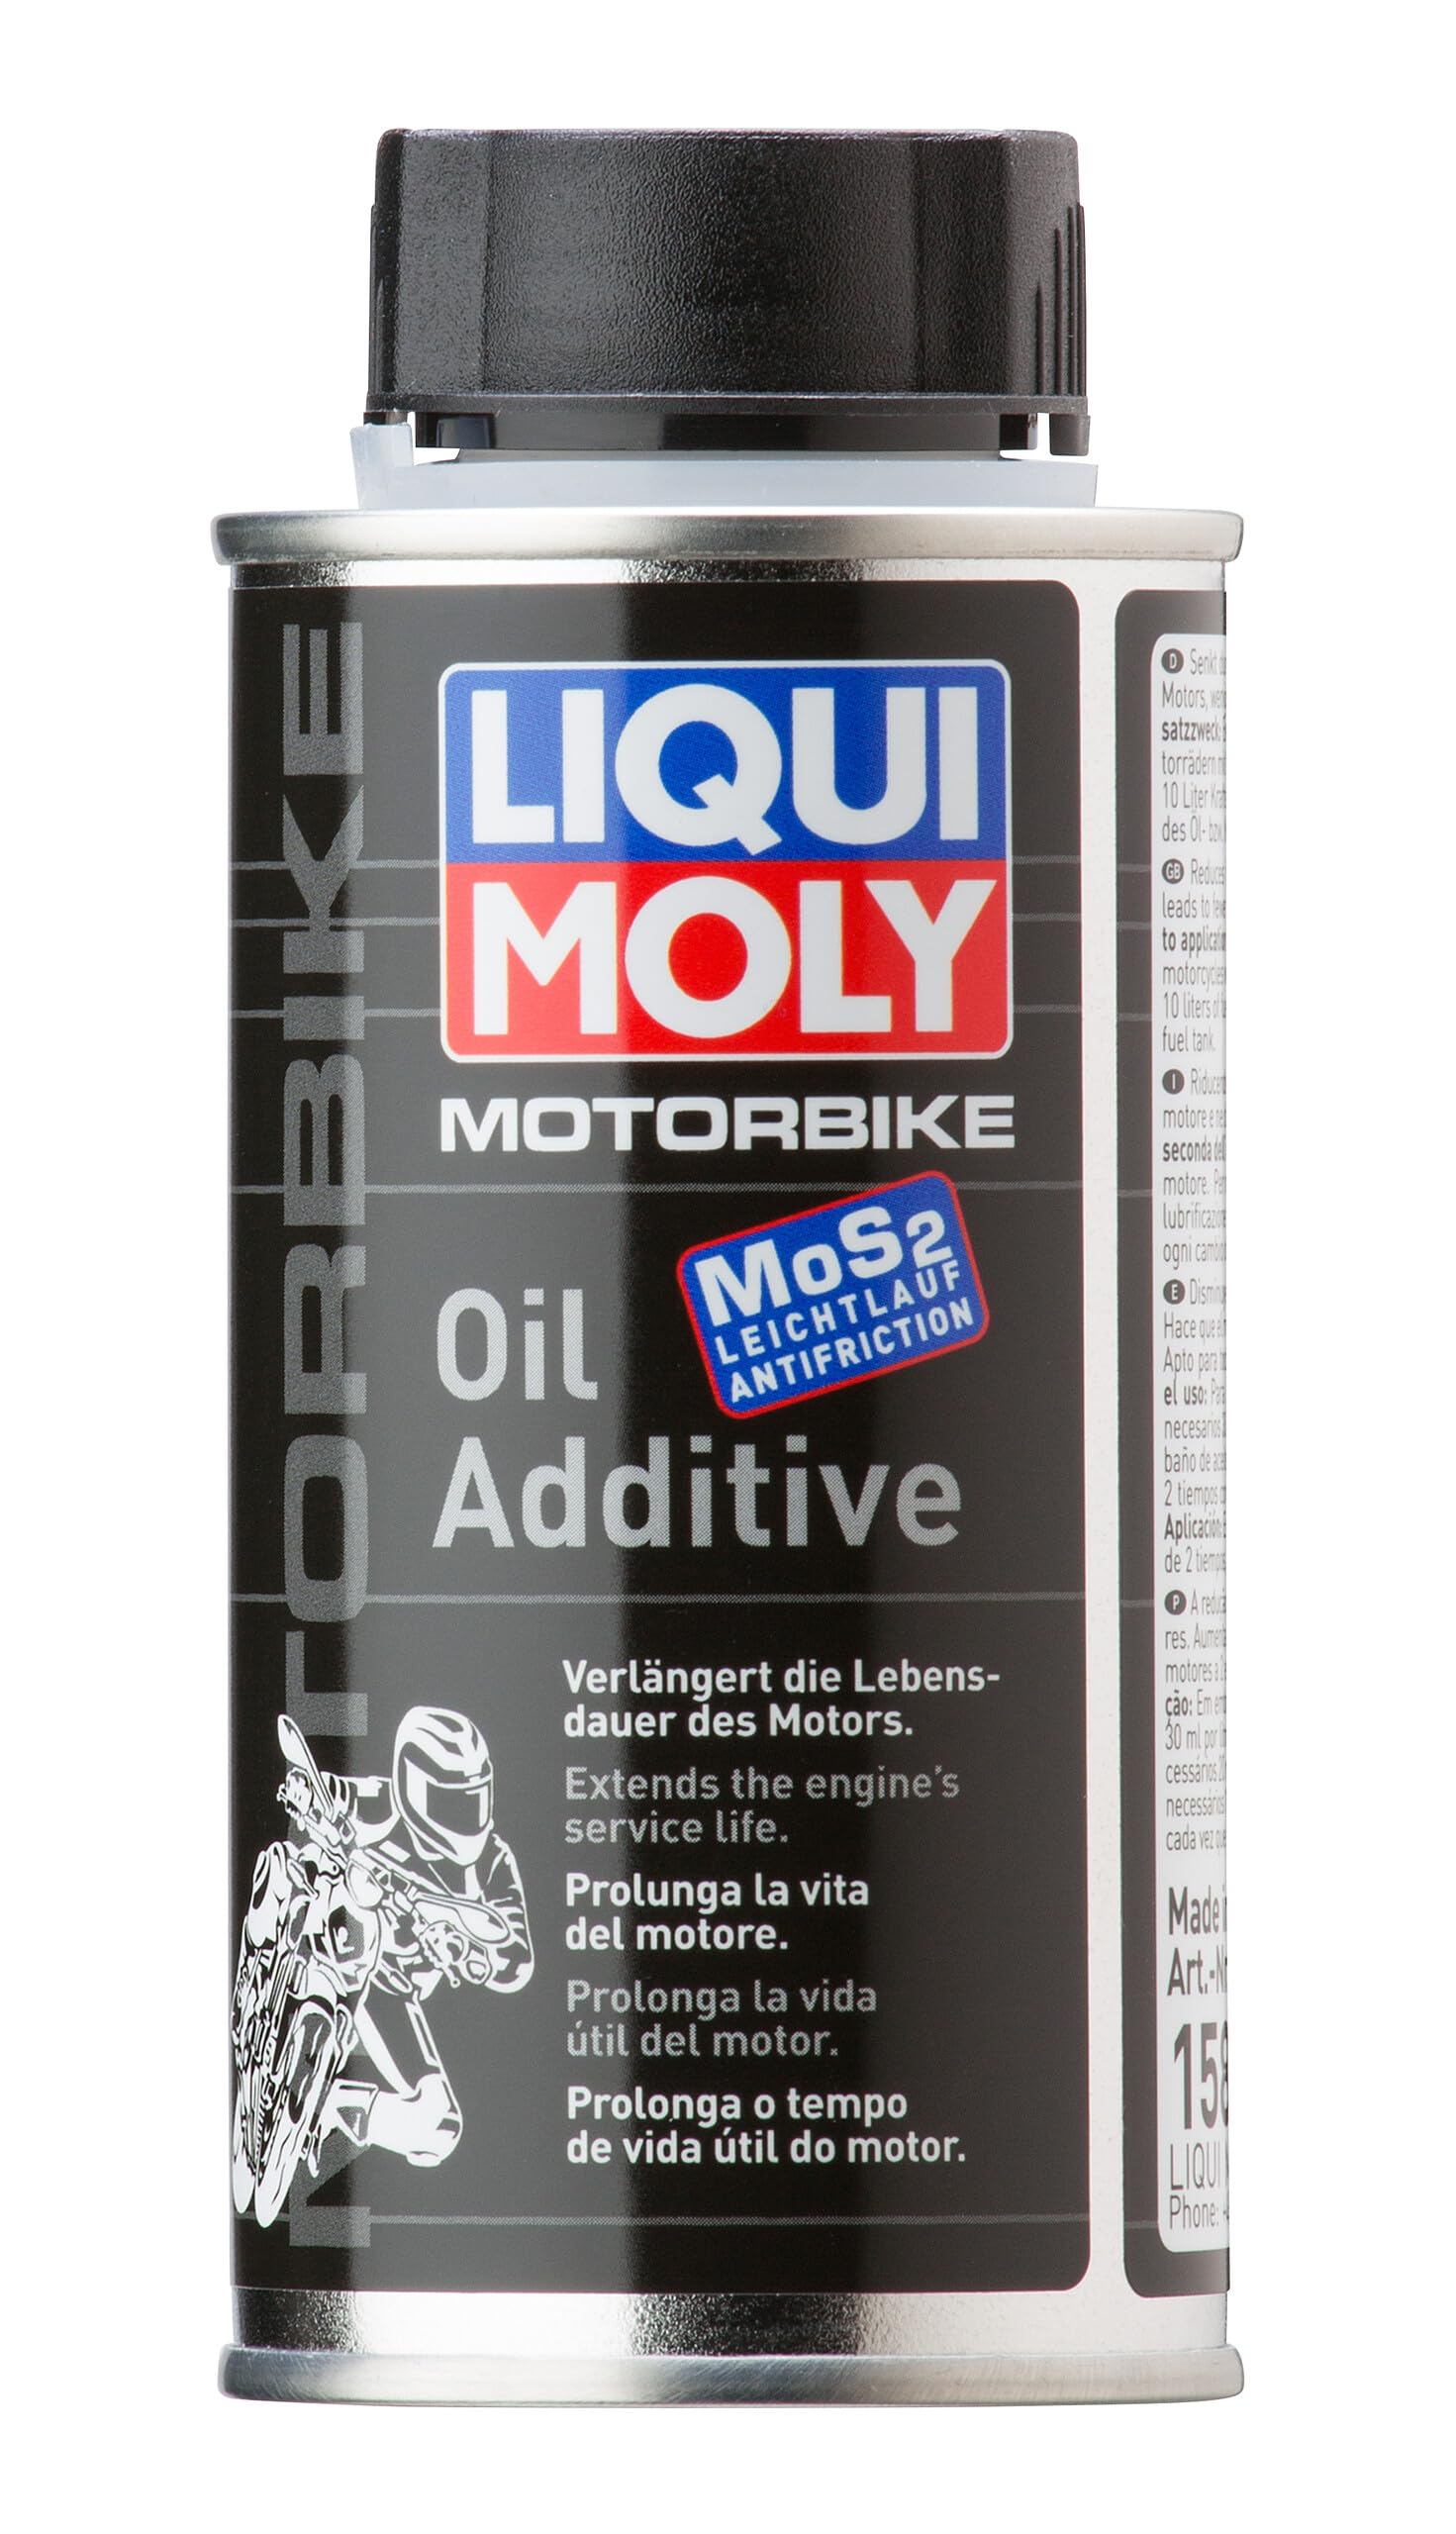 LIQUI MOLY Motorbike Oil Additive | 125 ml | Motorrad Öladditiv | Art.-Nr.: 1580 von Liqui Moly